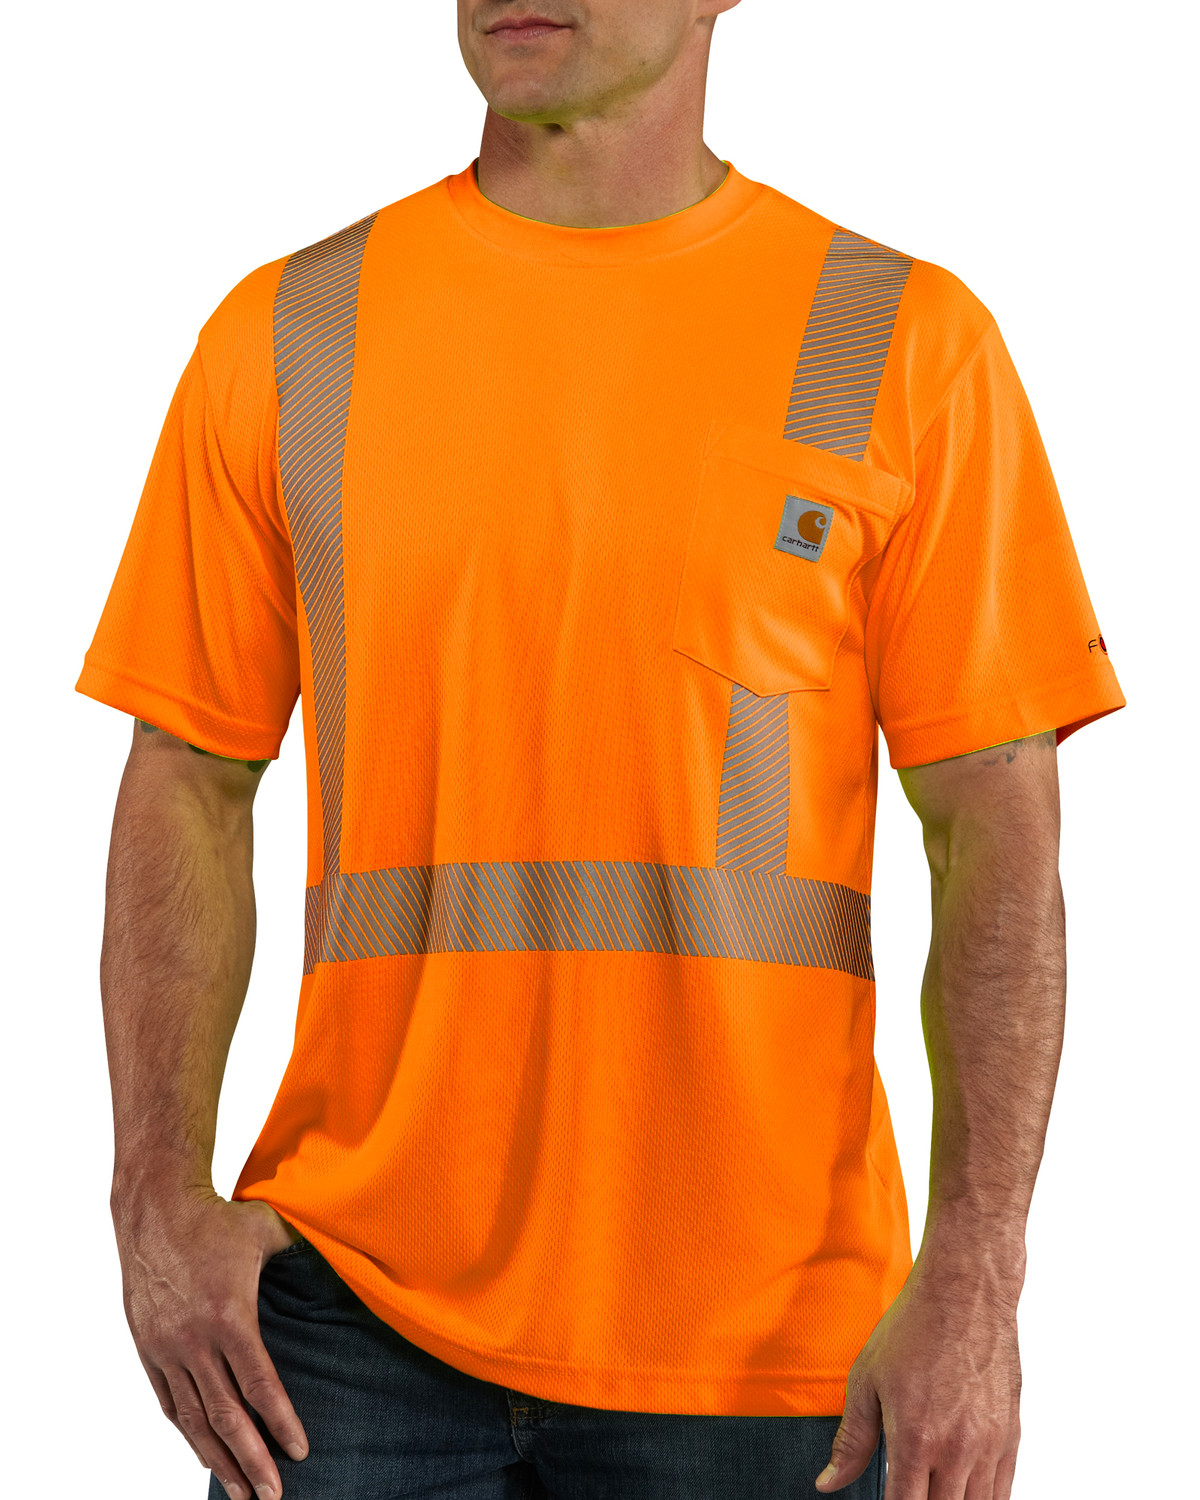 Carhartt Men's Orange Force High-Visibility Class 2 T-Shirt - Big